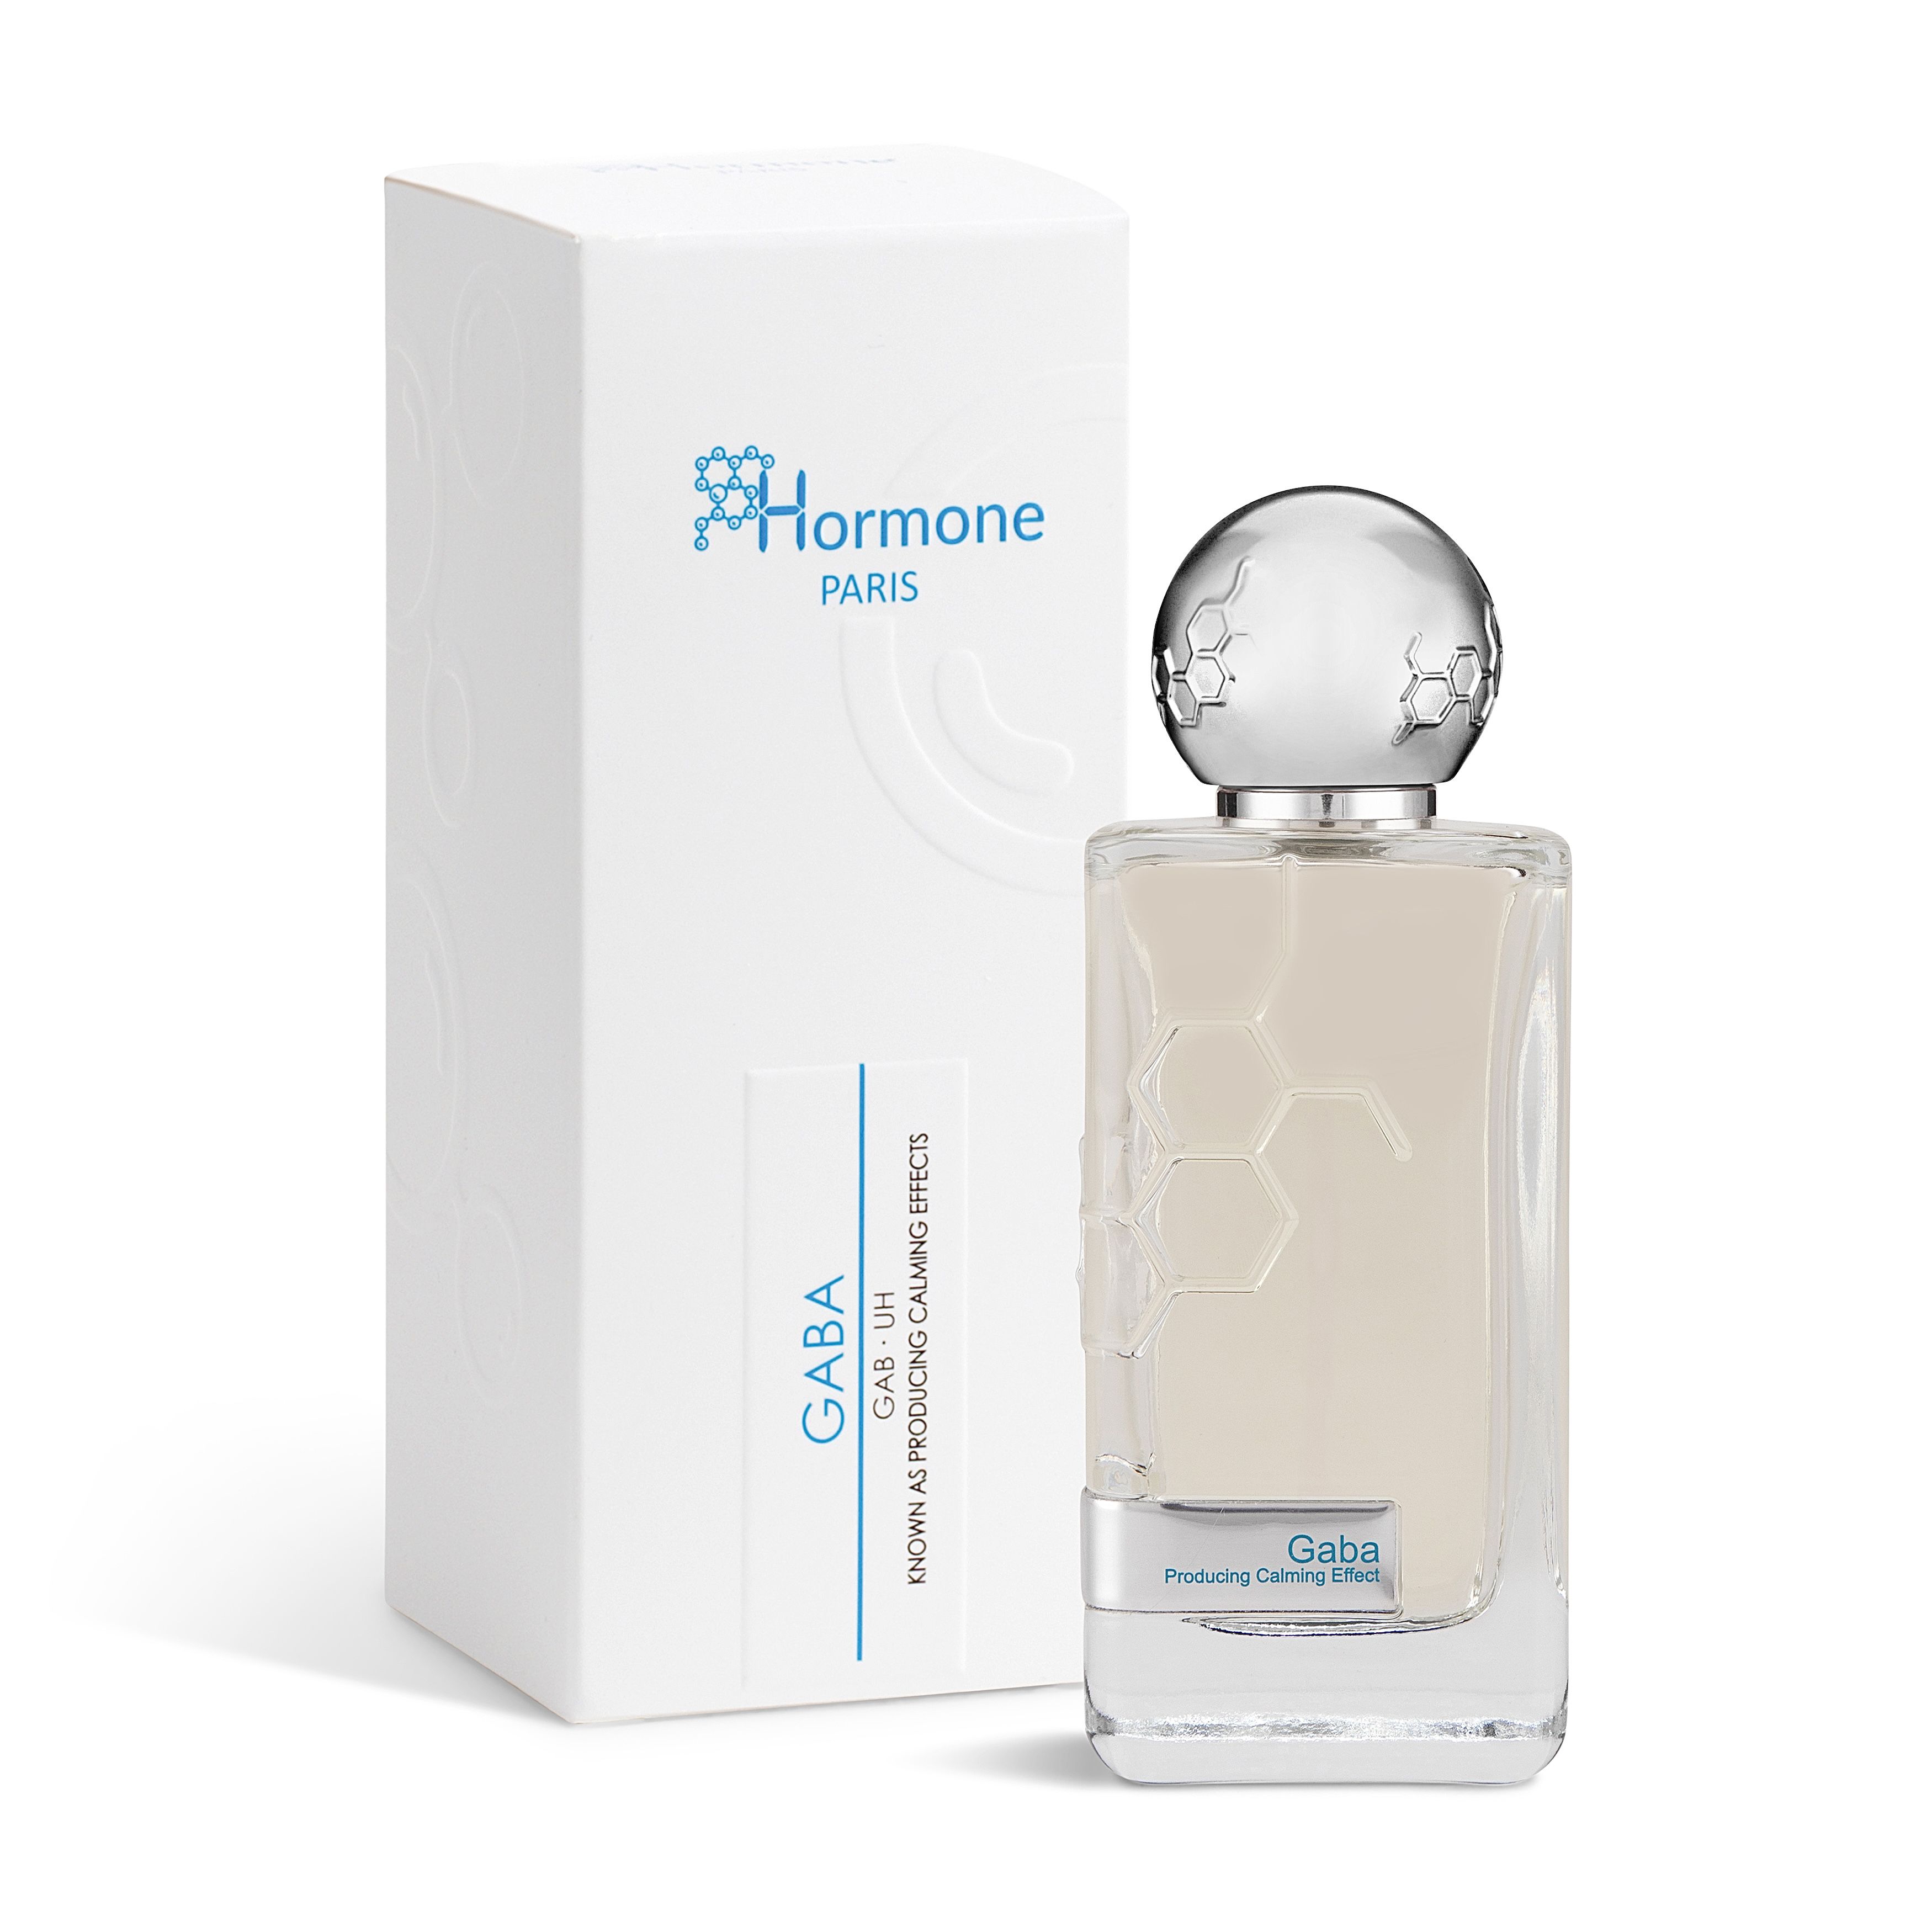 Gaba Hormone Paris perfume - a new fragrance for women and men 2023